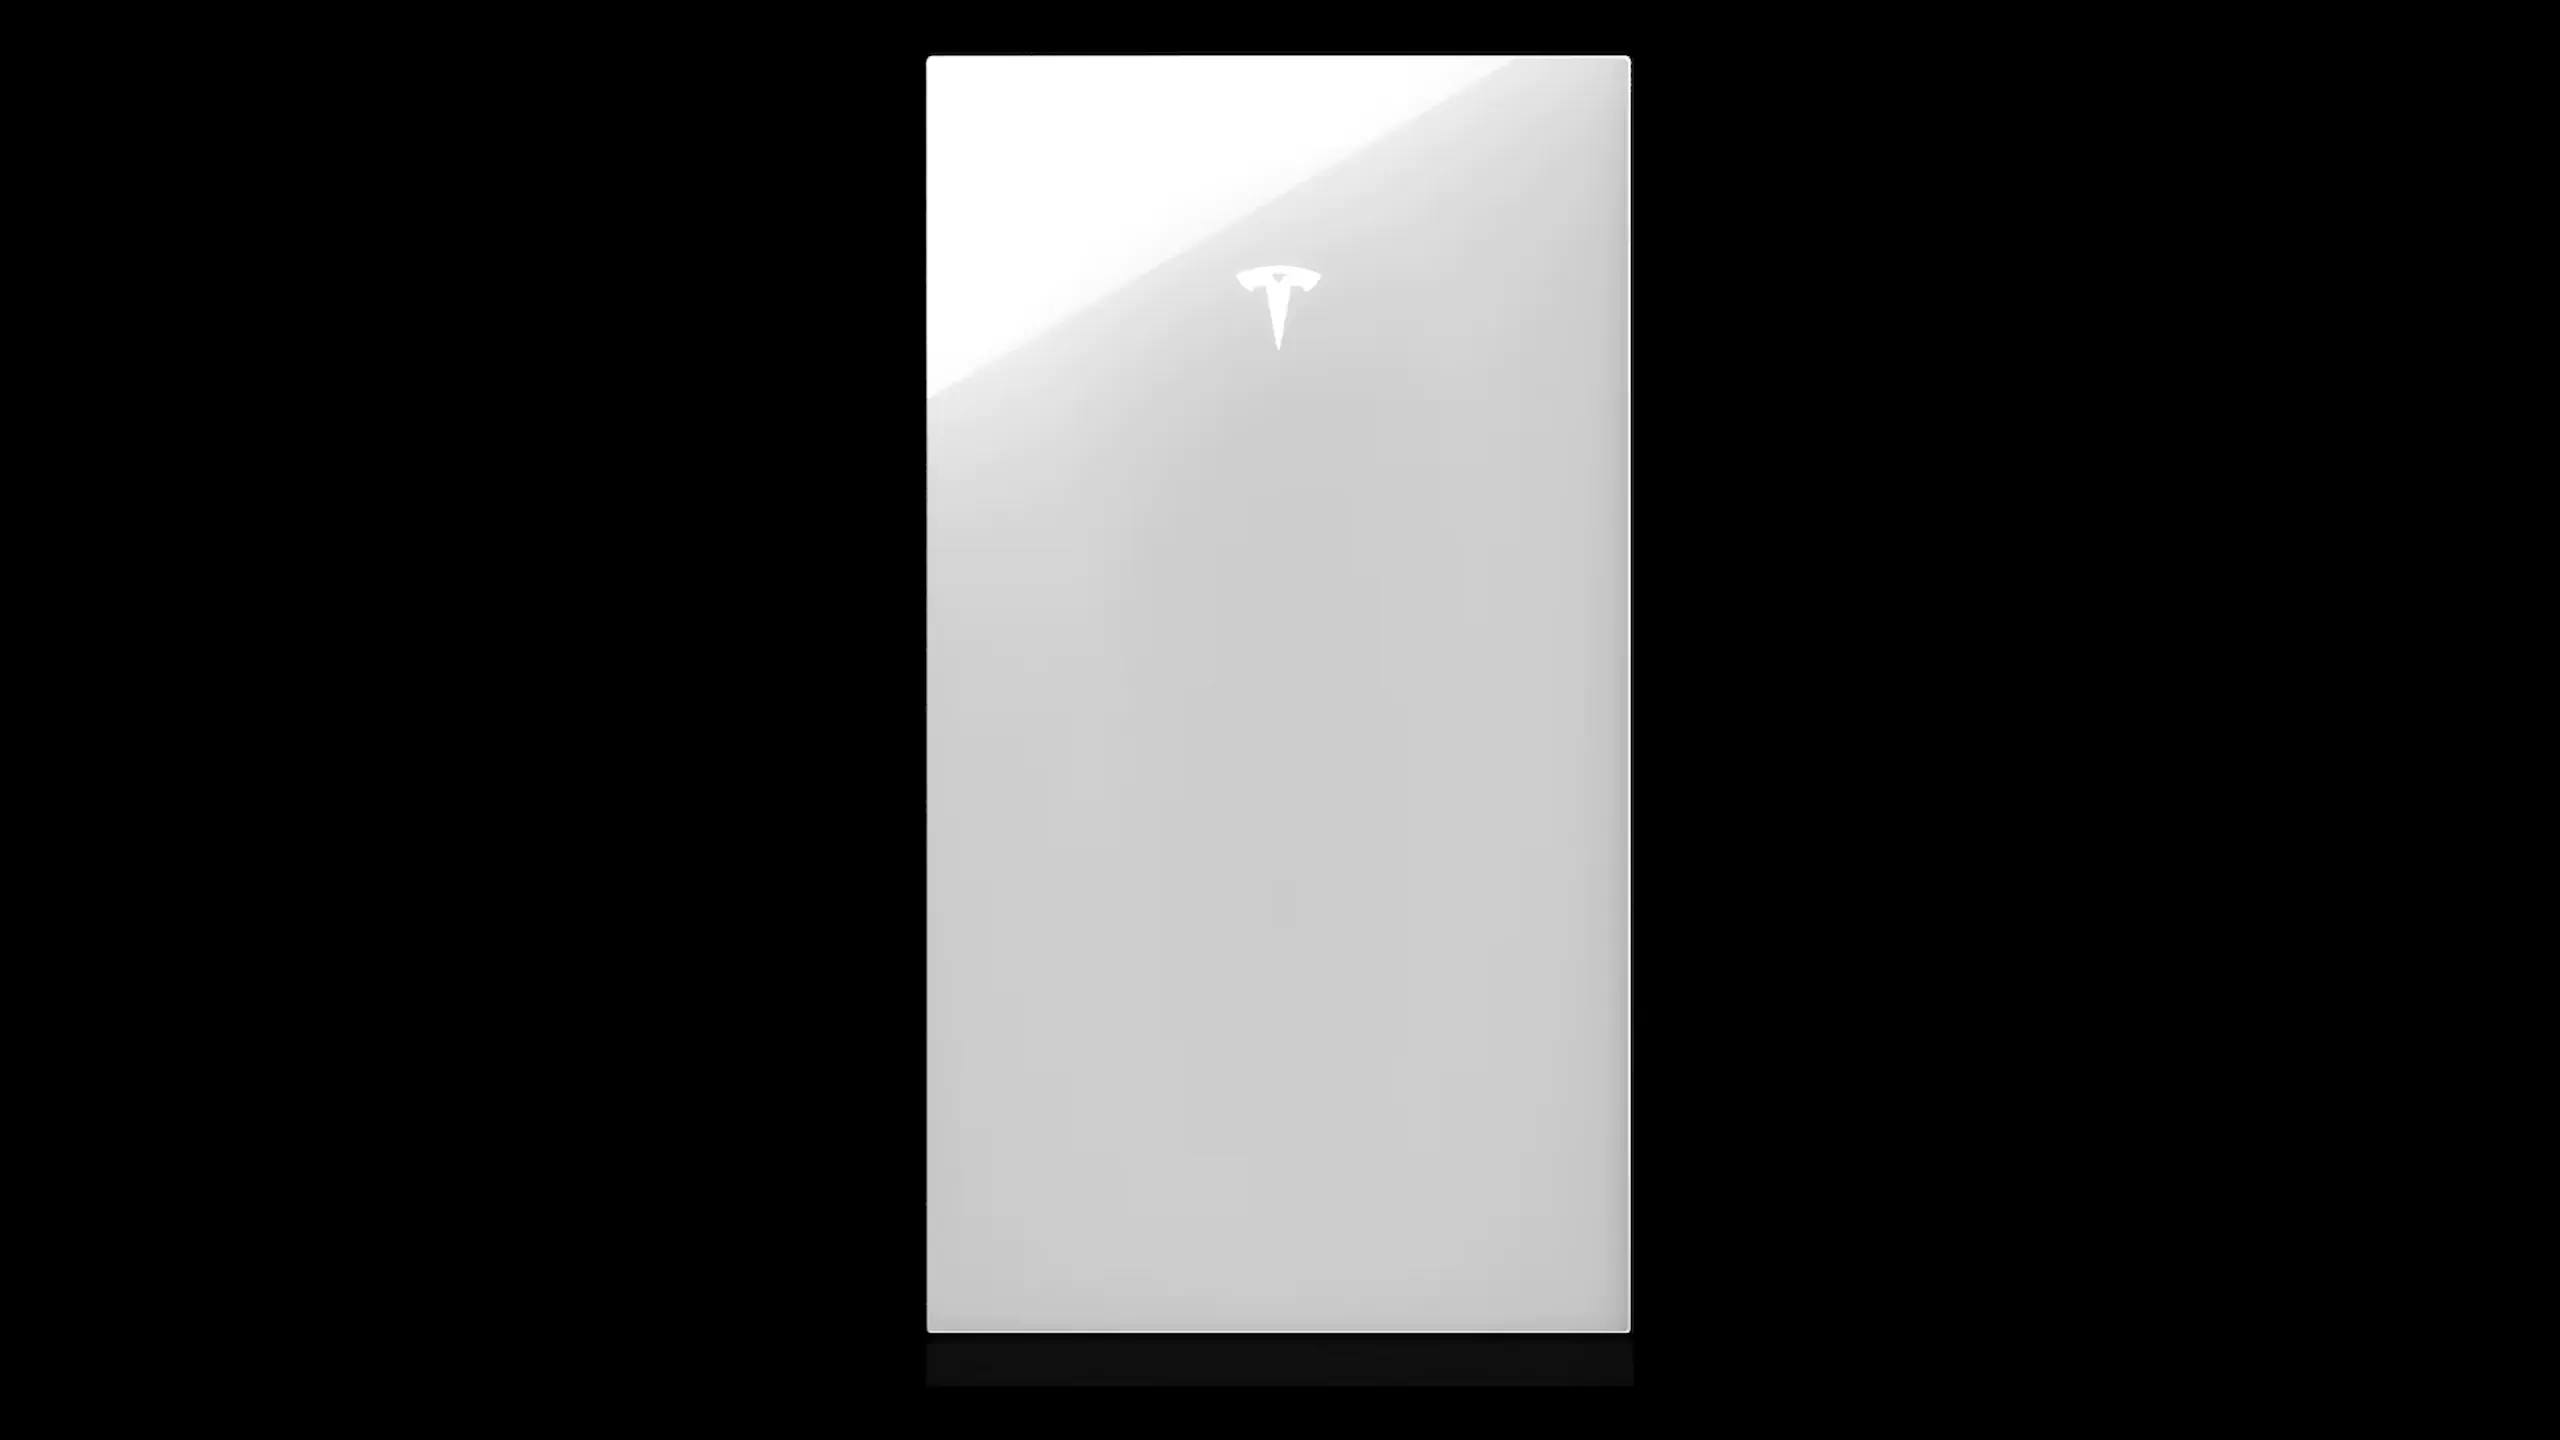 The Tesla Powerwall 3